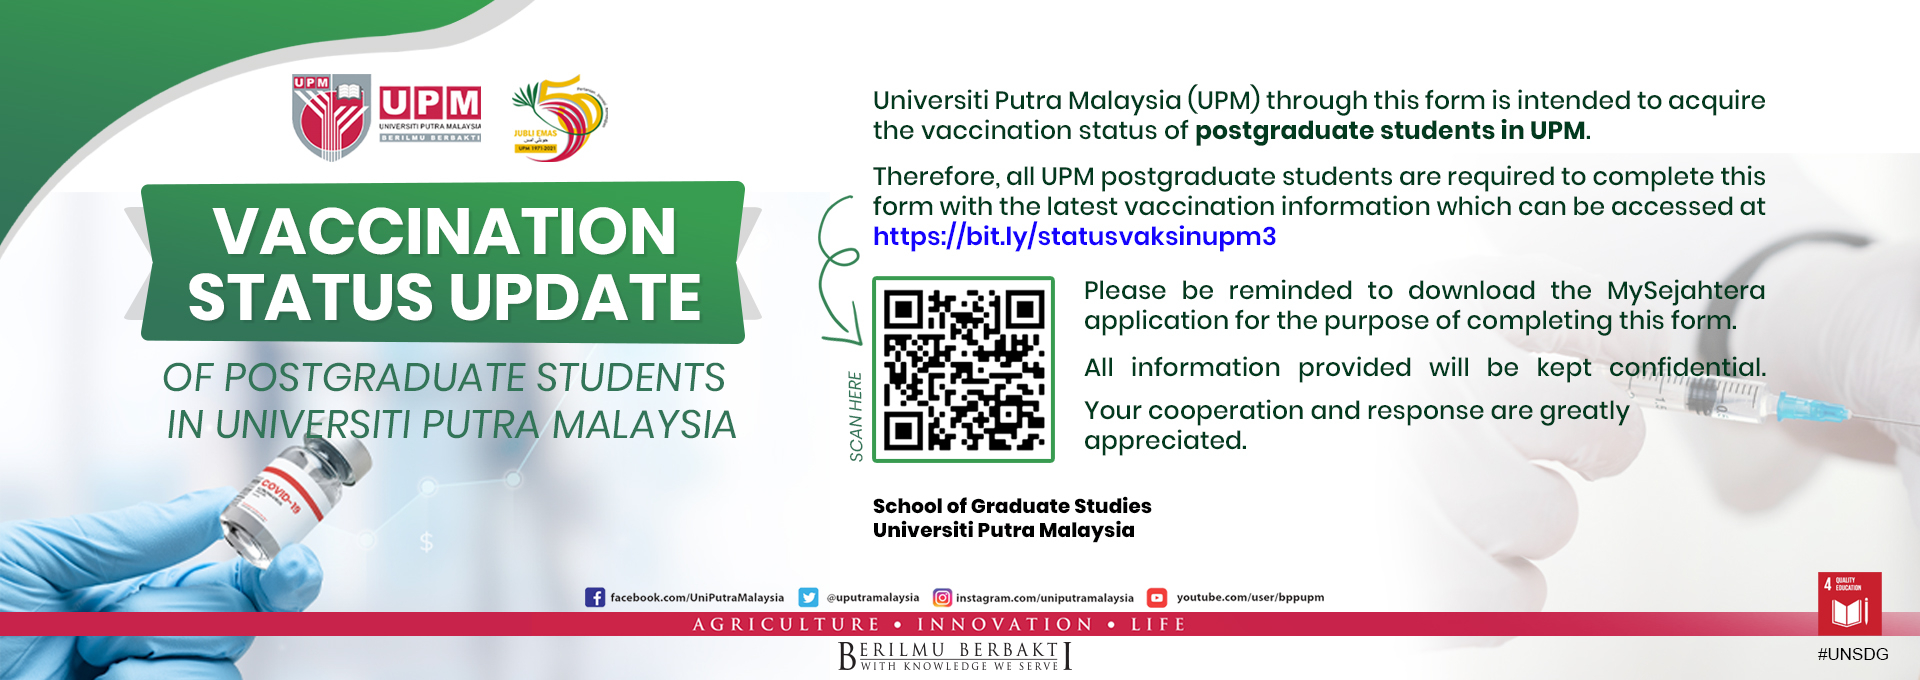 Vaccination Status Update